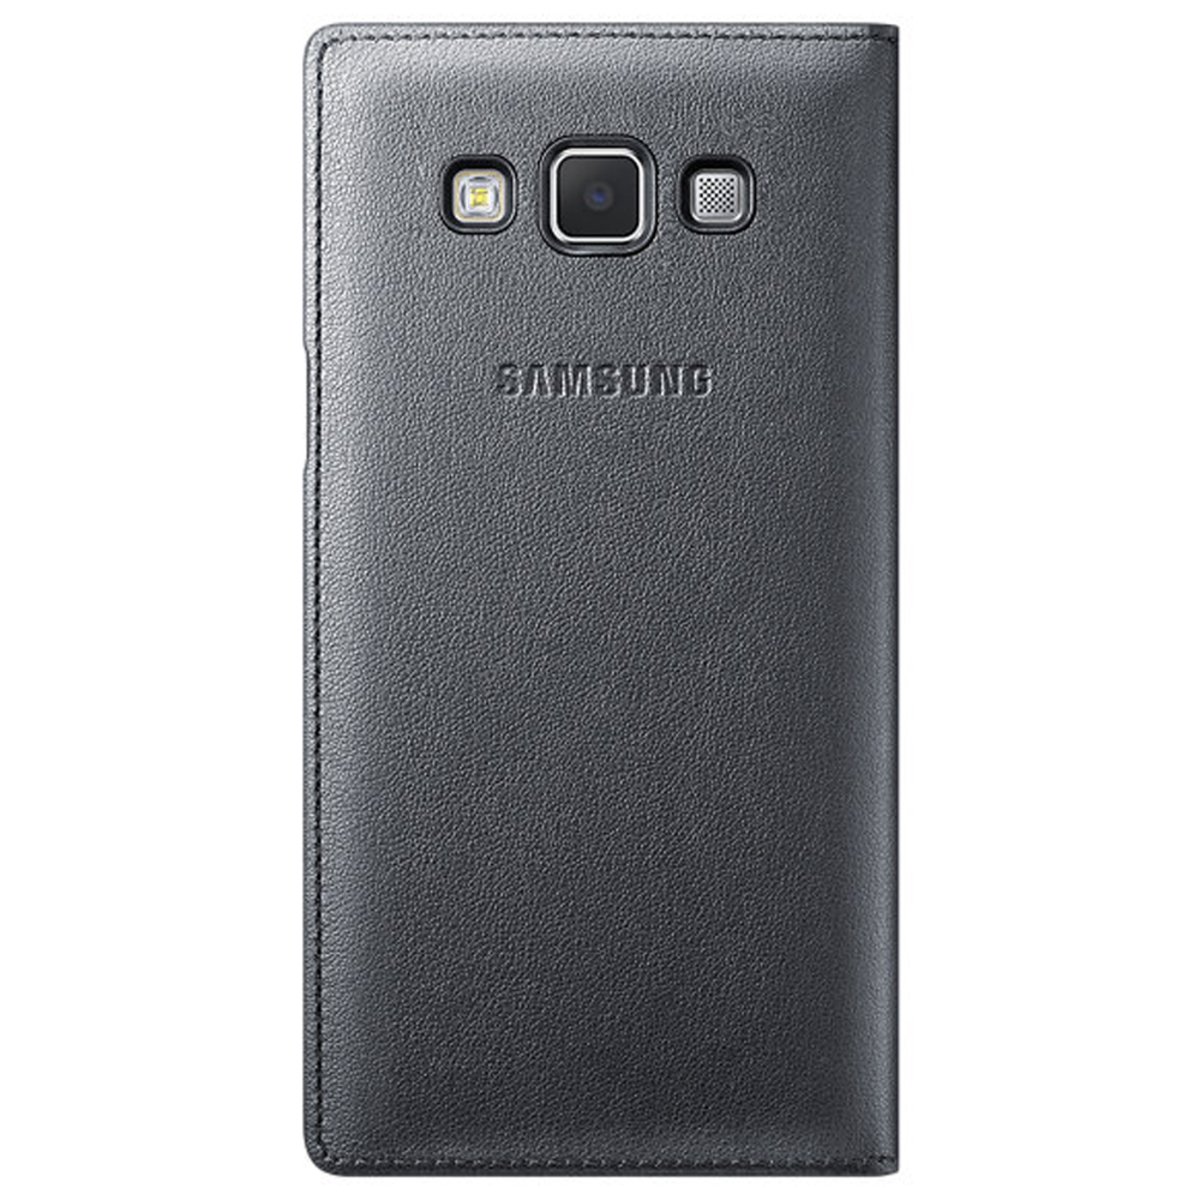 Samsung Galaxy A5 S-View Case Grey